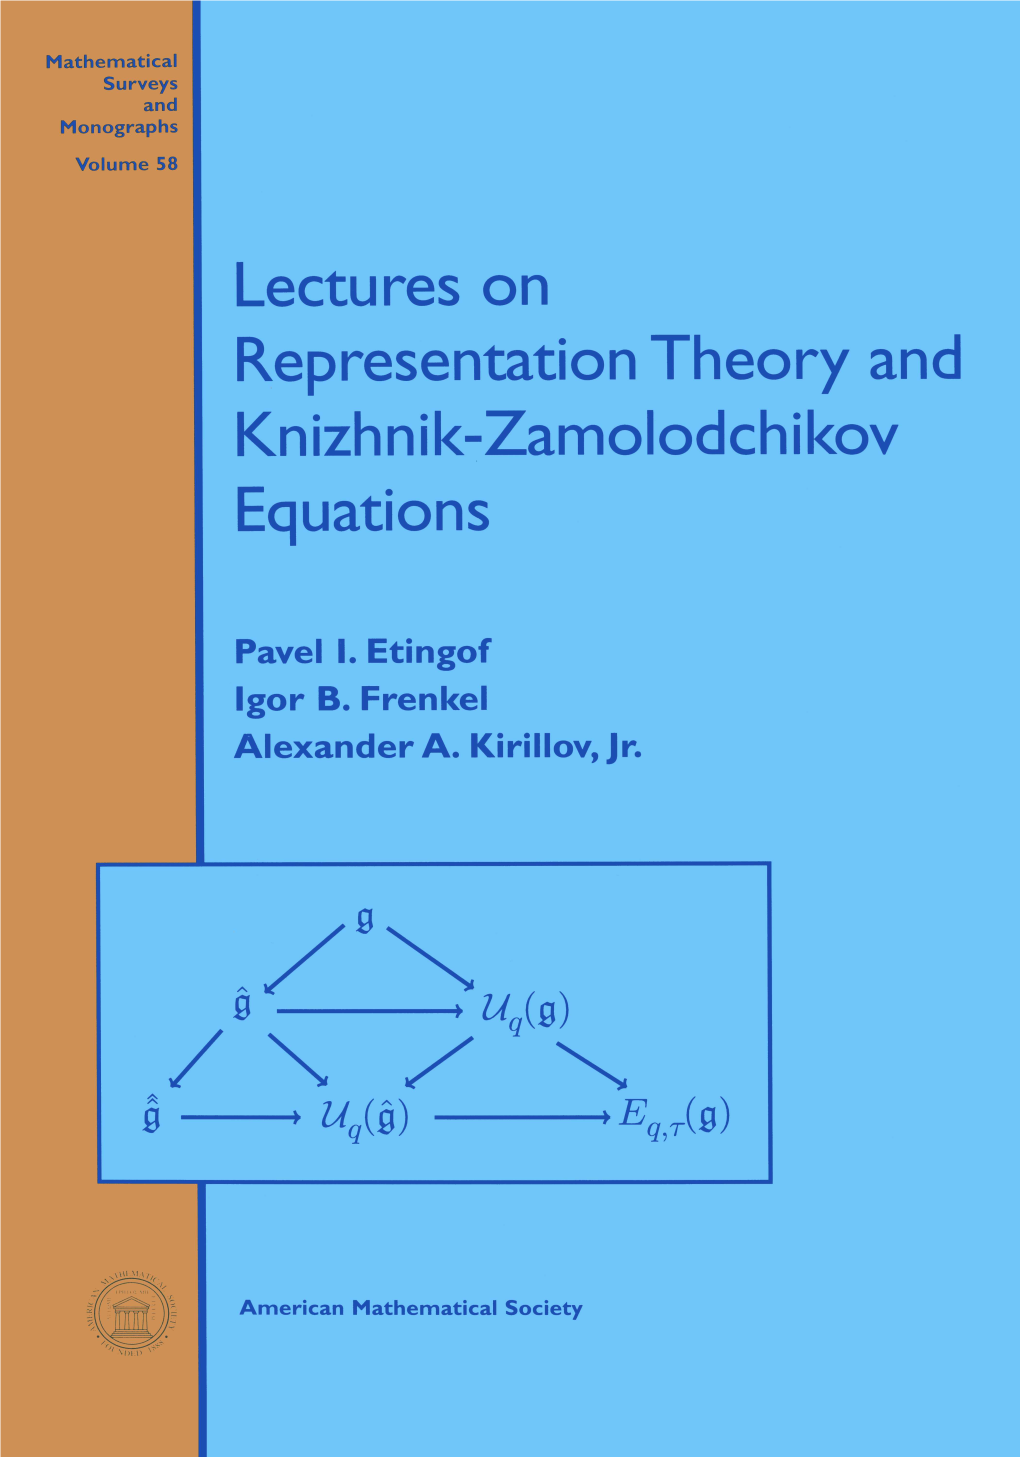 Lectures on Representation Theory and Knizhnik-Zamolodchikov Equations, 1998 57 Marc Levine, Mixed Motives, 1998 56 Leonid I